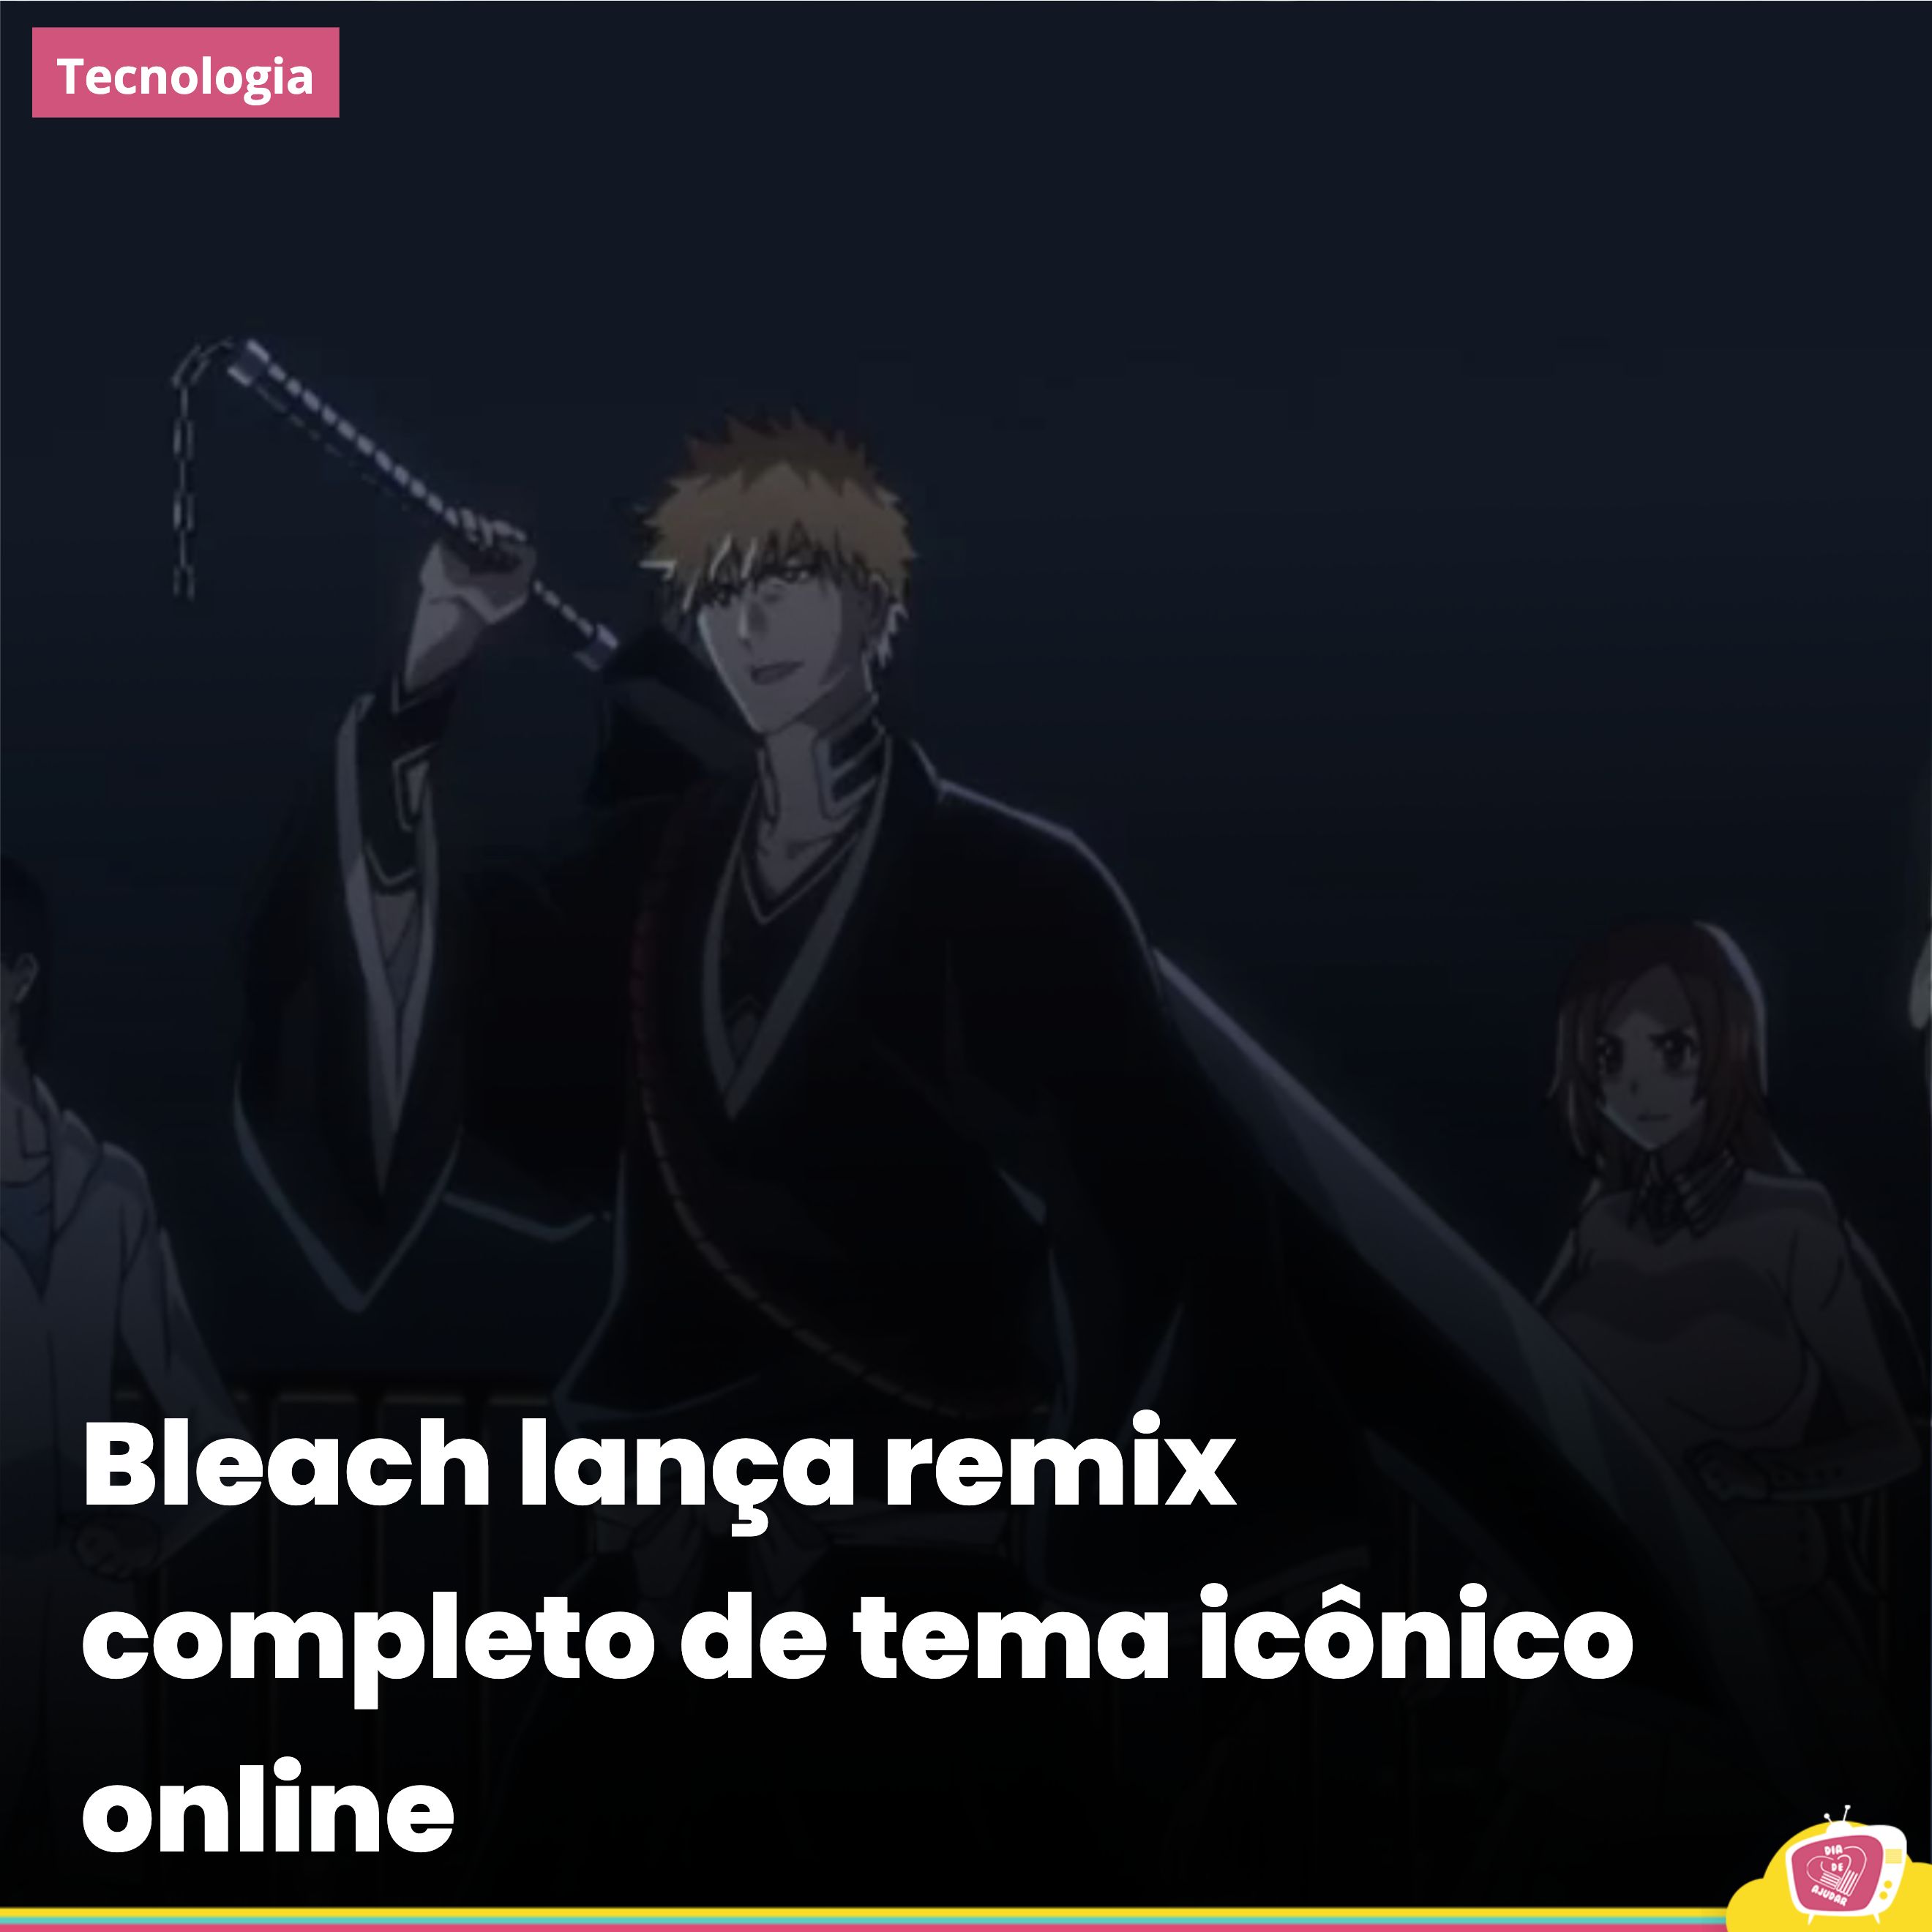 Bleach lança remix completo de tema icônico online